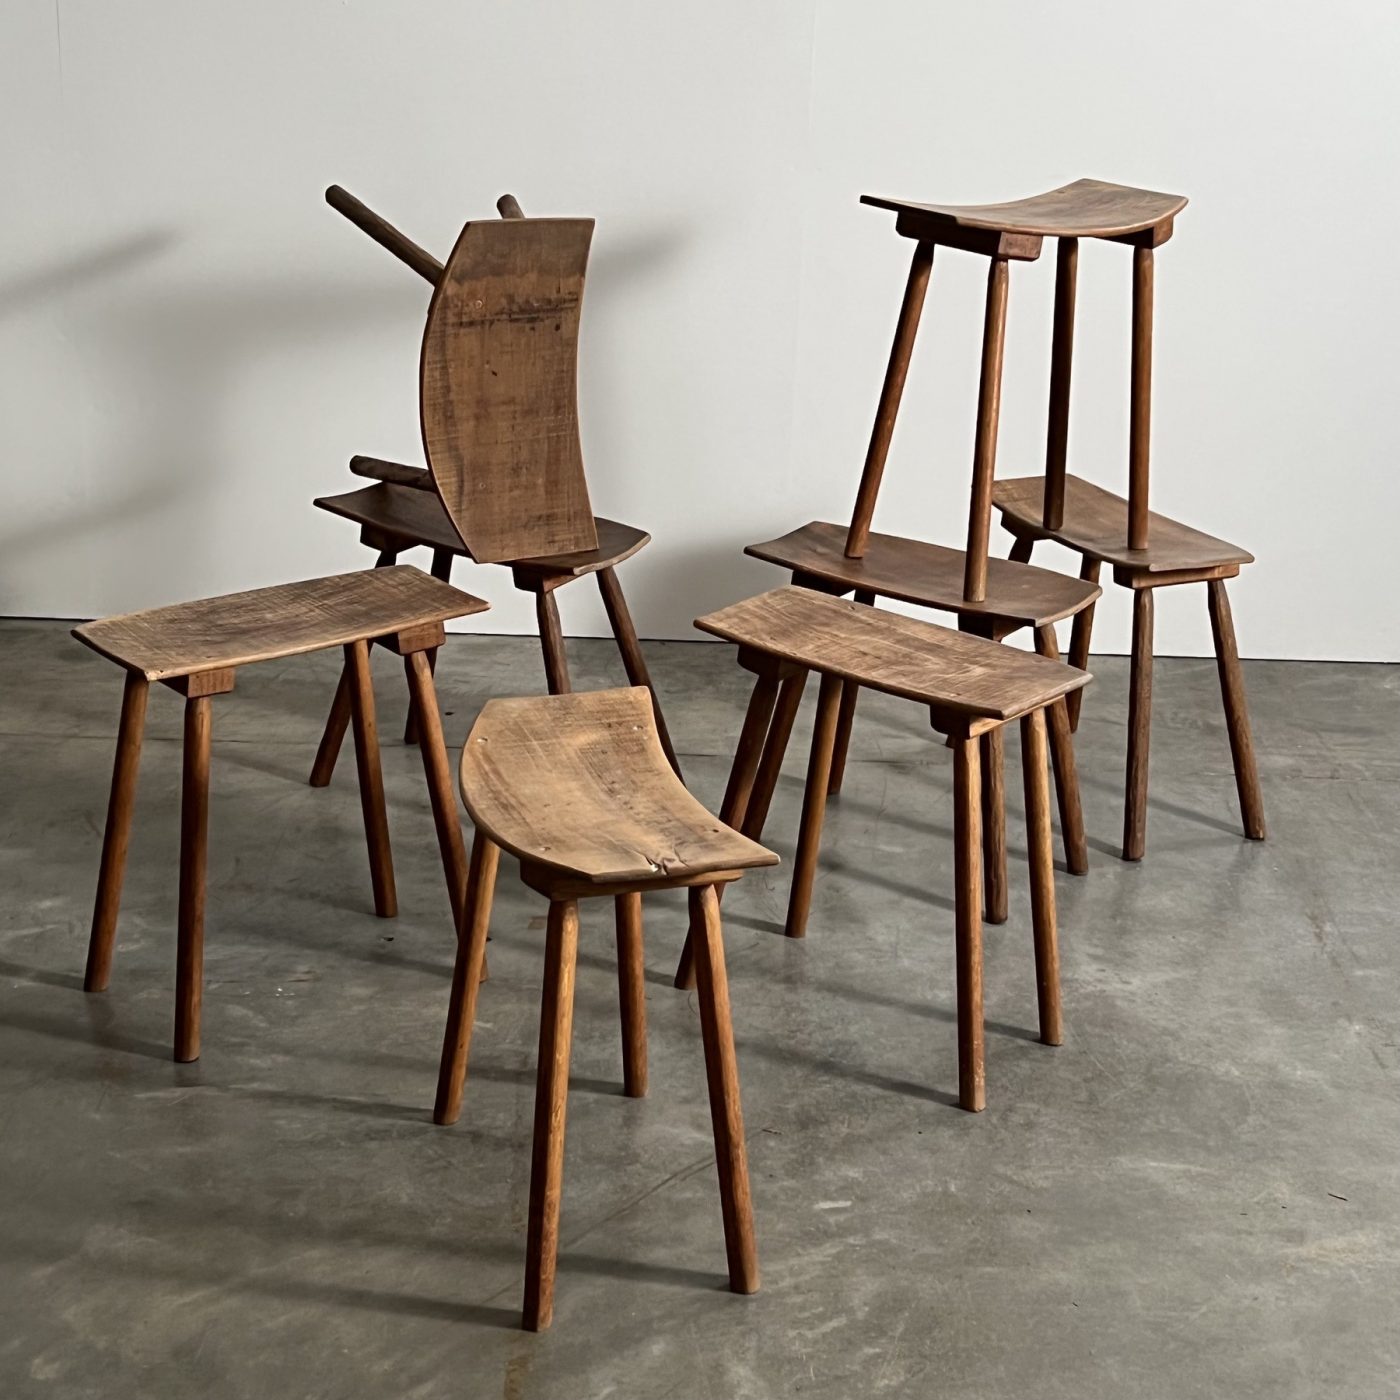 objet-vagabond-stools-collection0000